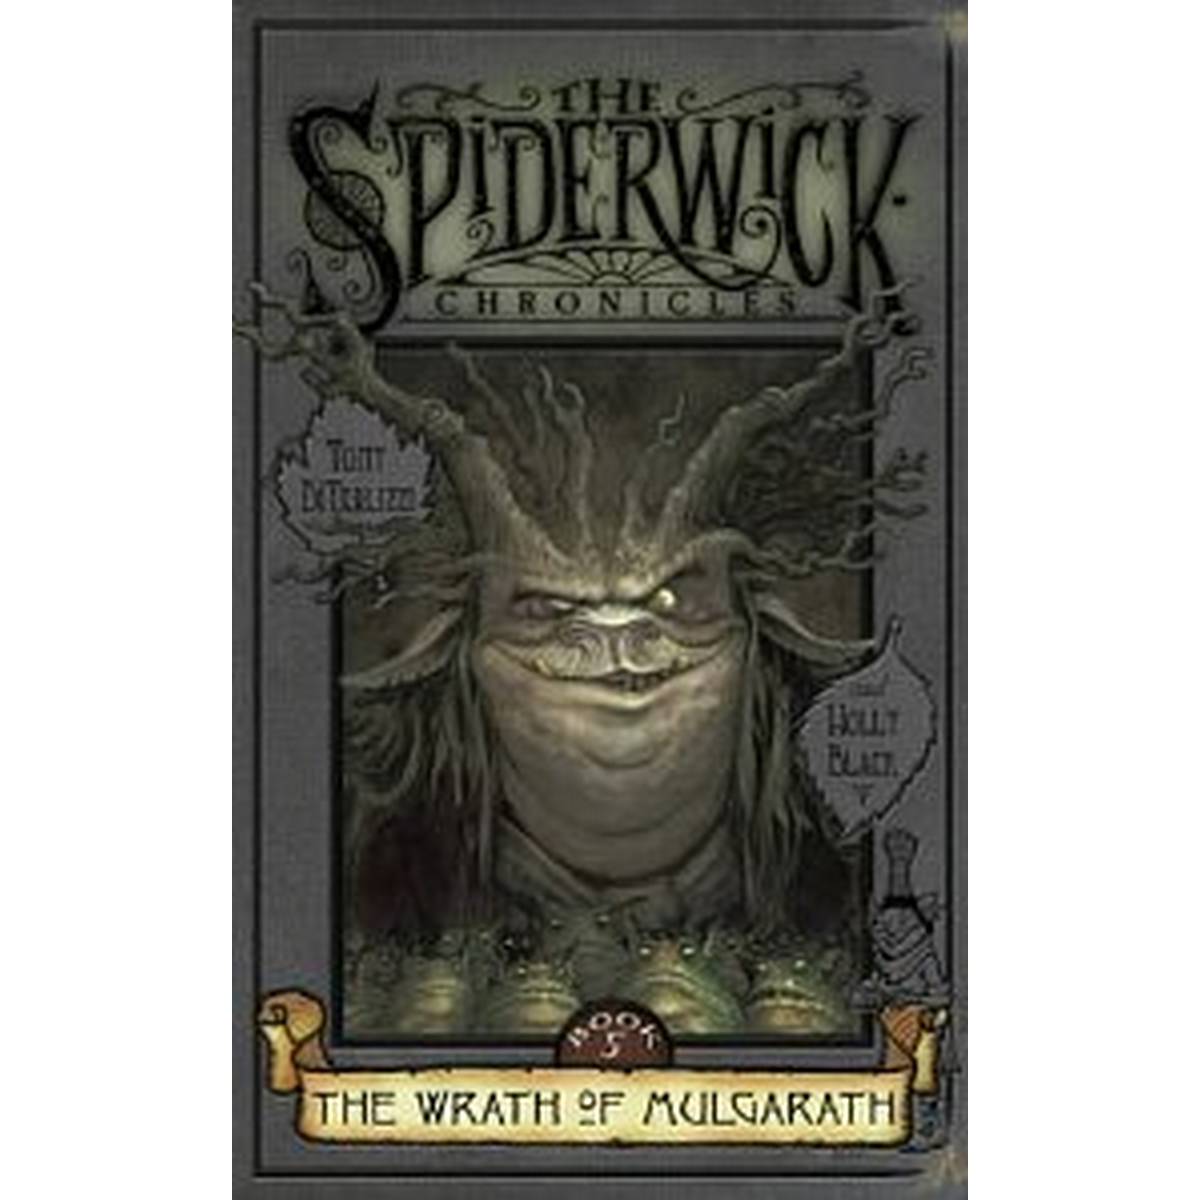 The Wrath of Mulgarath (Spiderwick Chronicles) 5